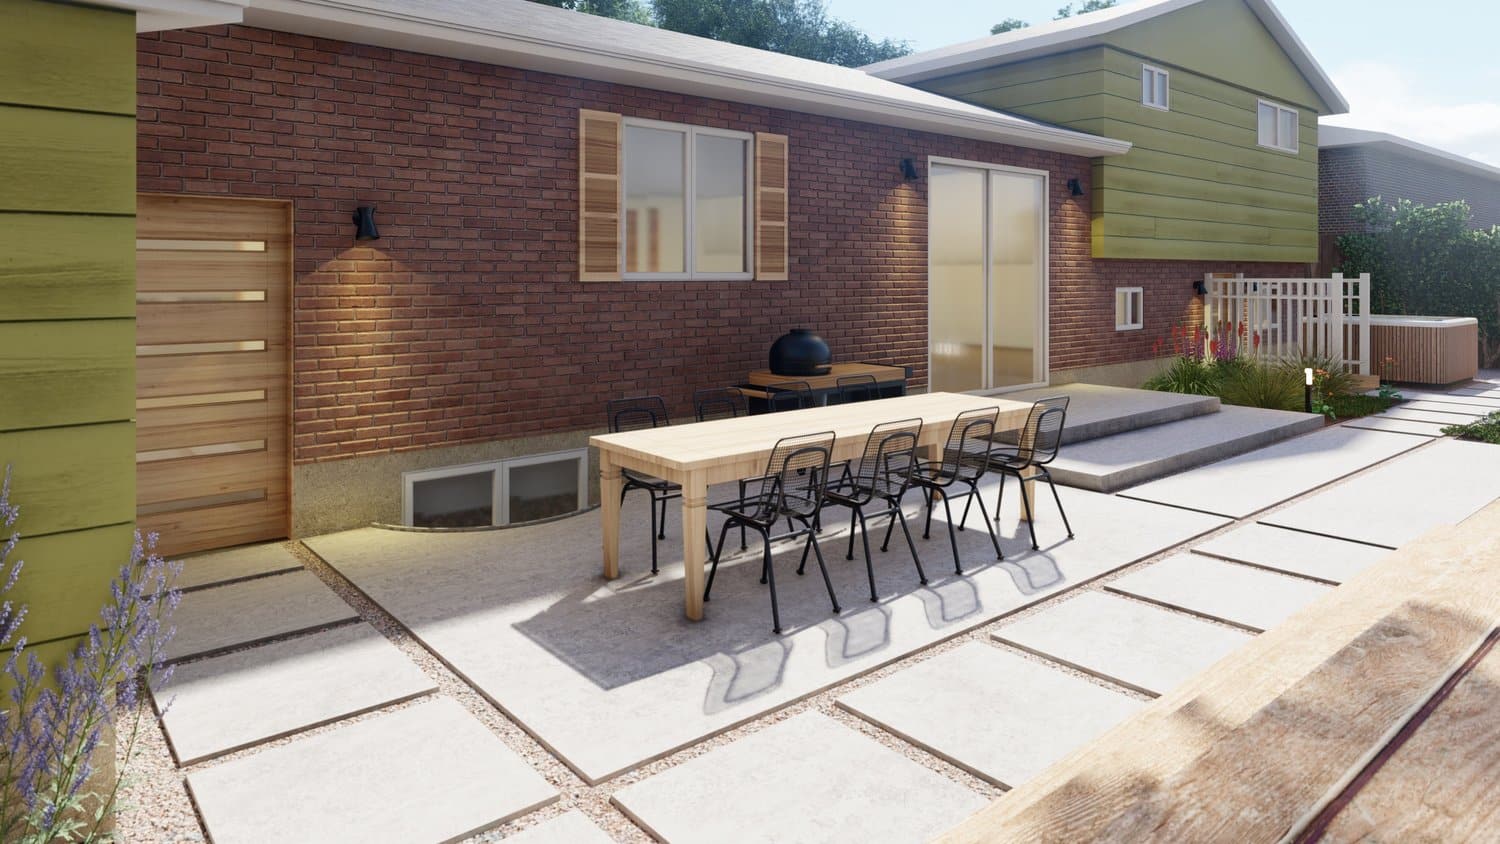 Cheyenne concrete paver backyard with concrete patio dining area